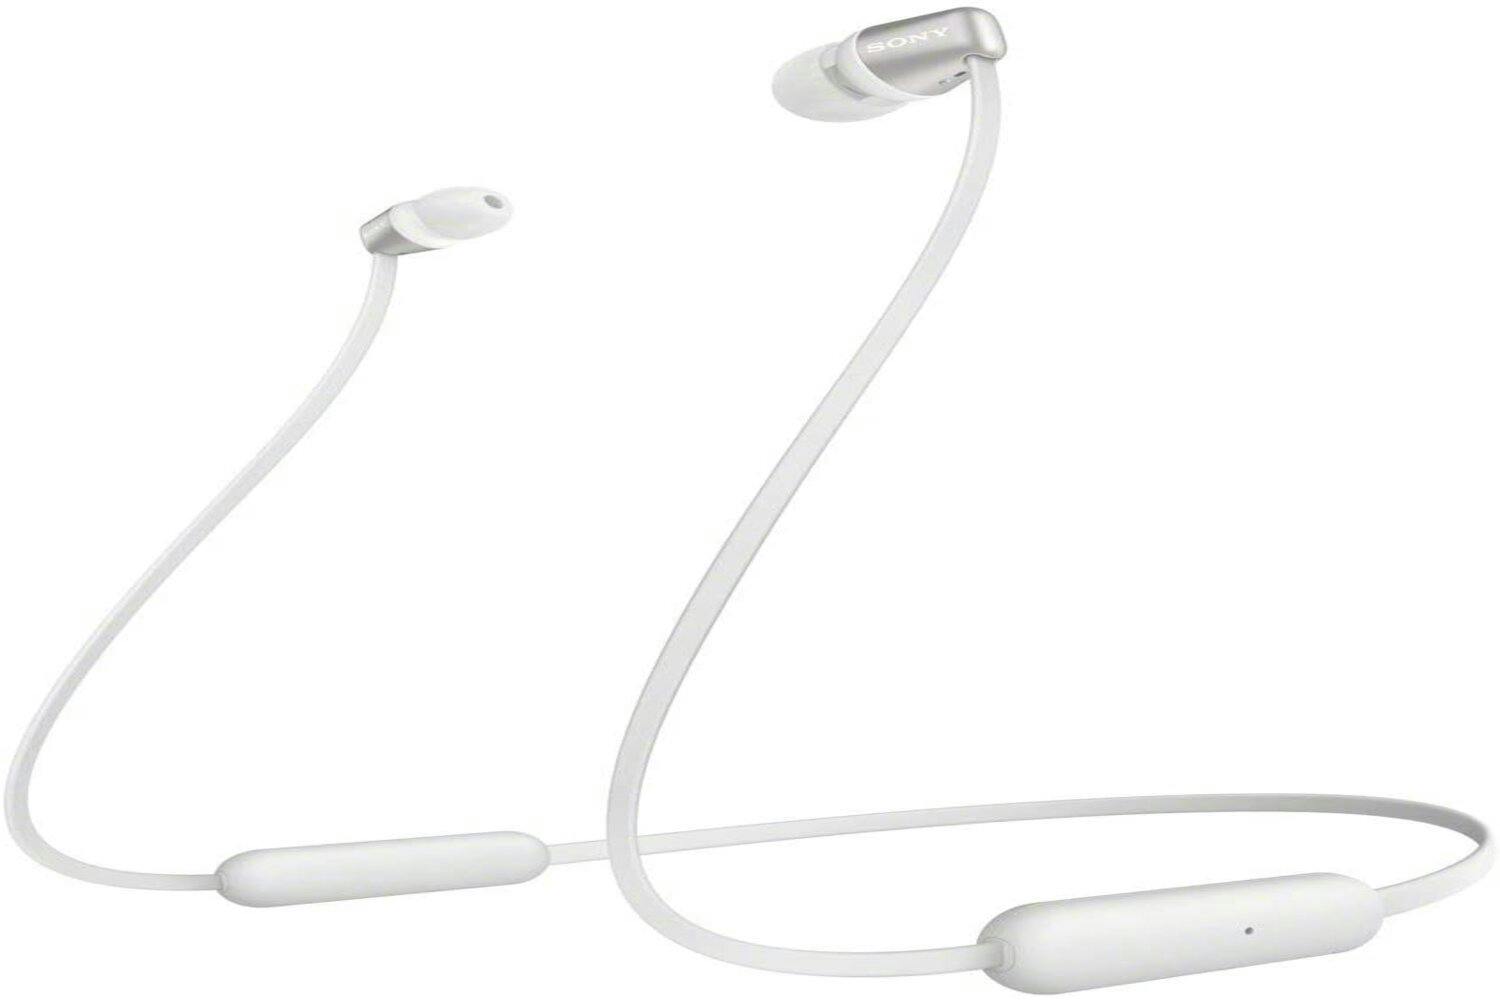 Bluetooth & Wireless Headphones